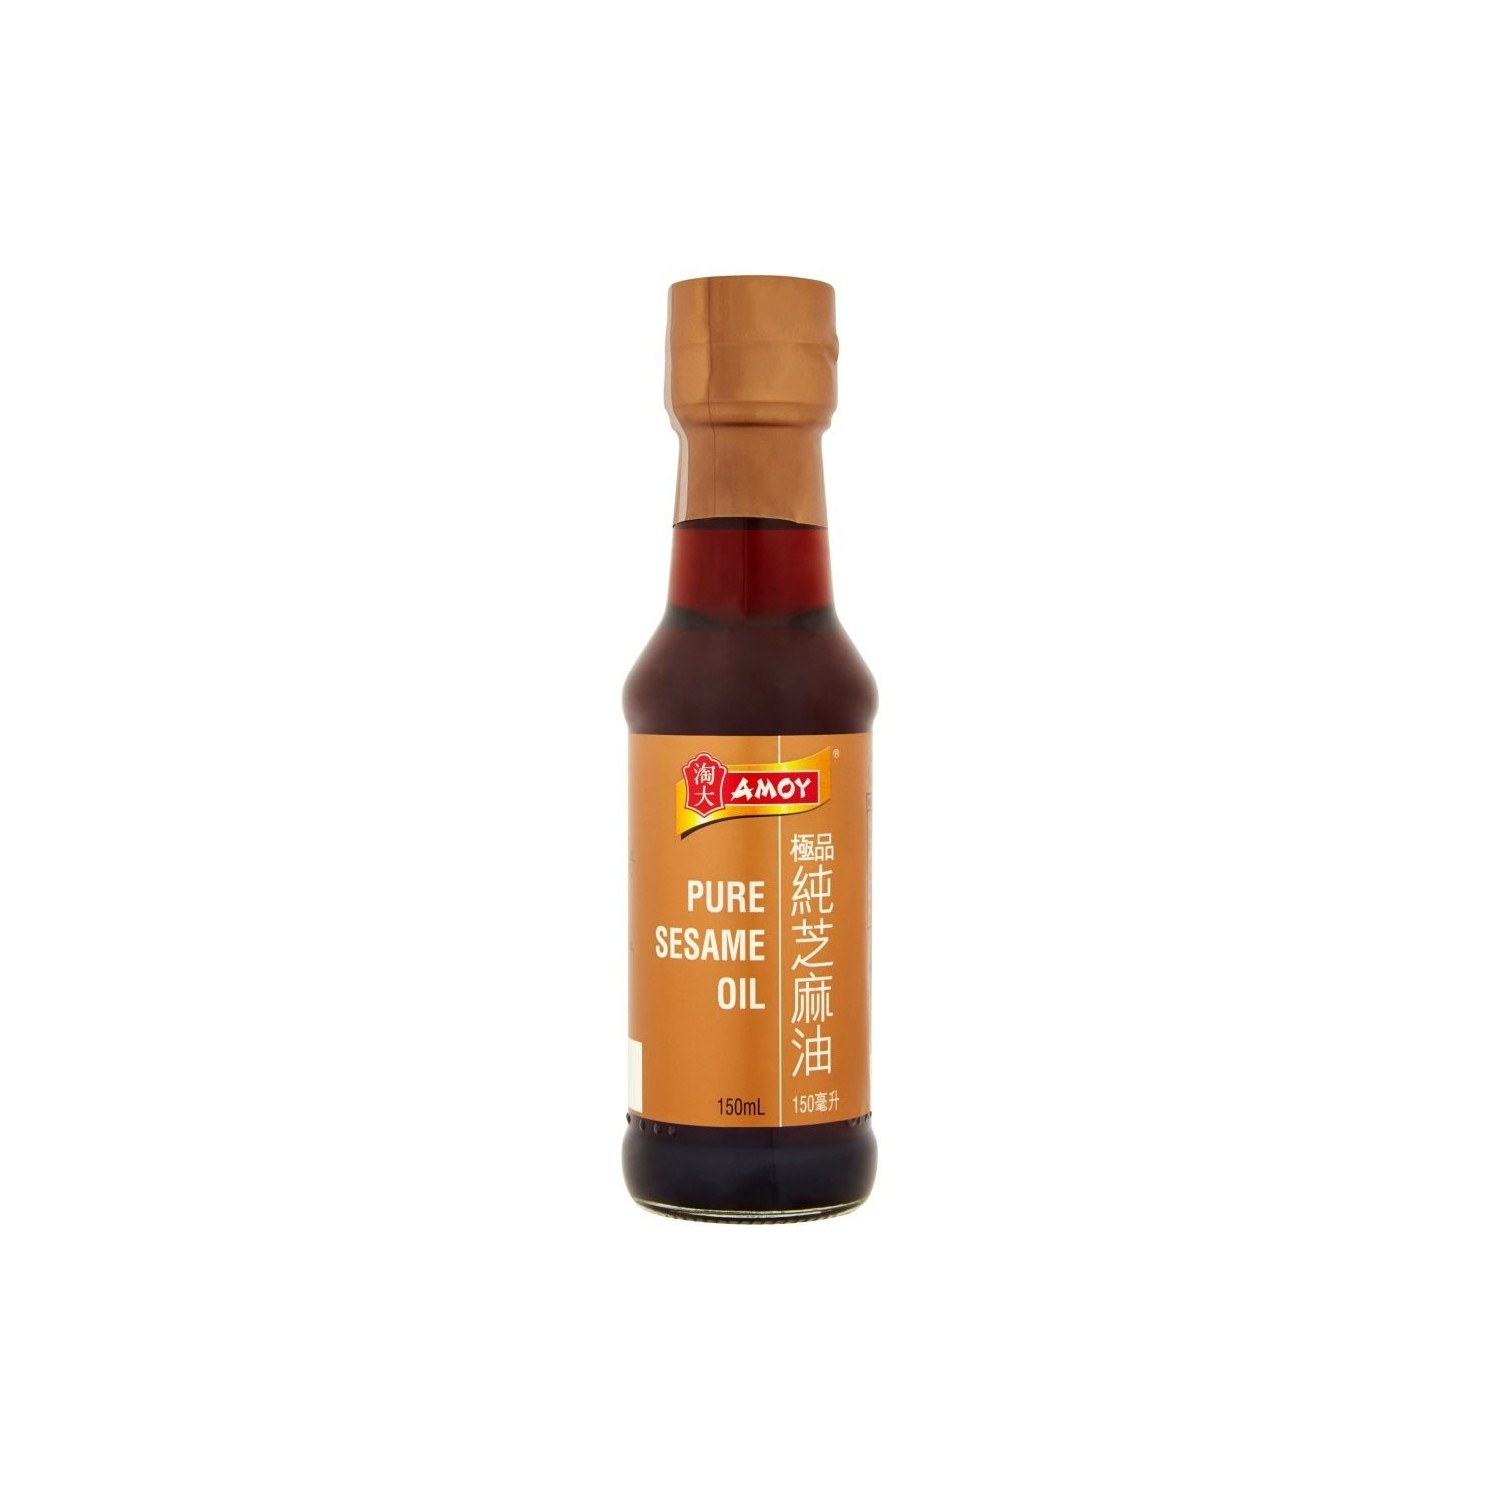 Amoy (淘大纯芝麻油) 500ml Pure Sesame Oil